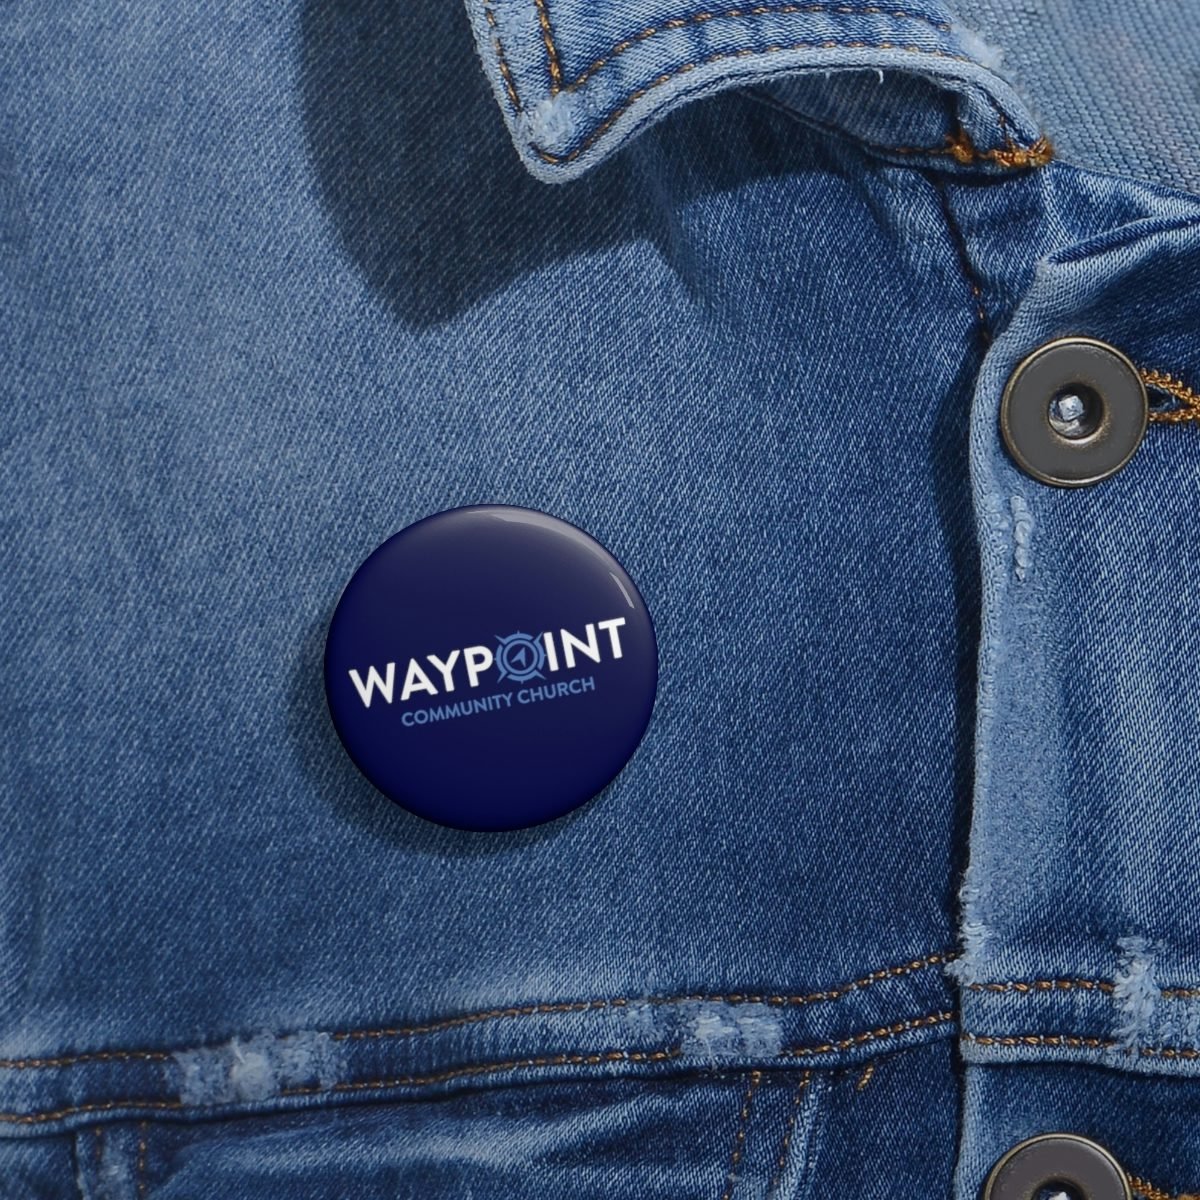 Waypoint Church Pin Buttons